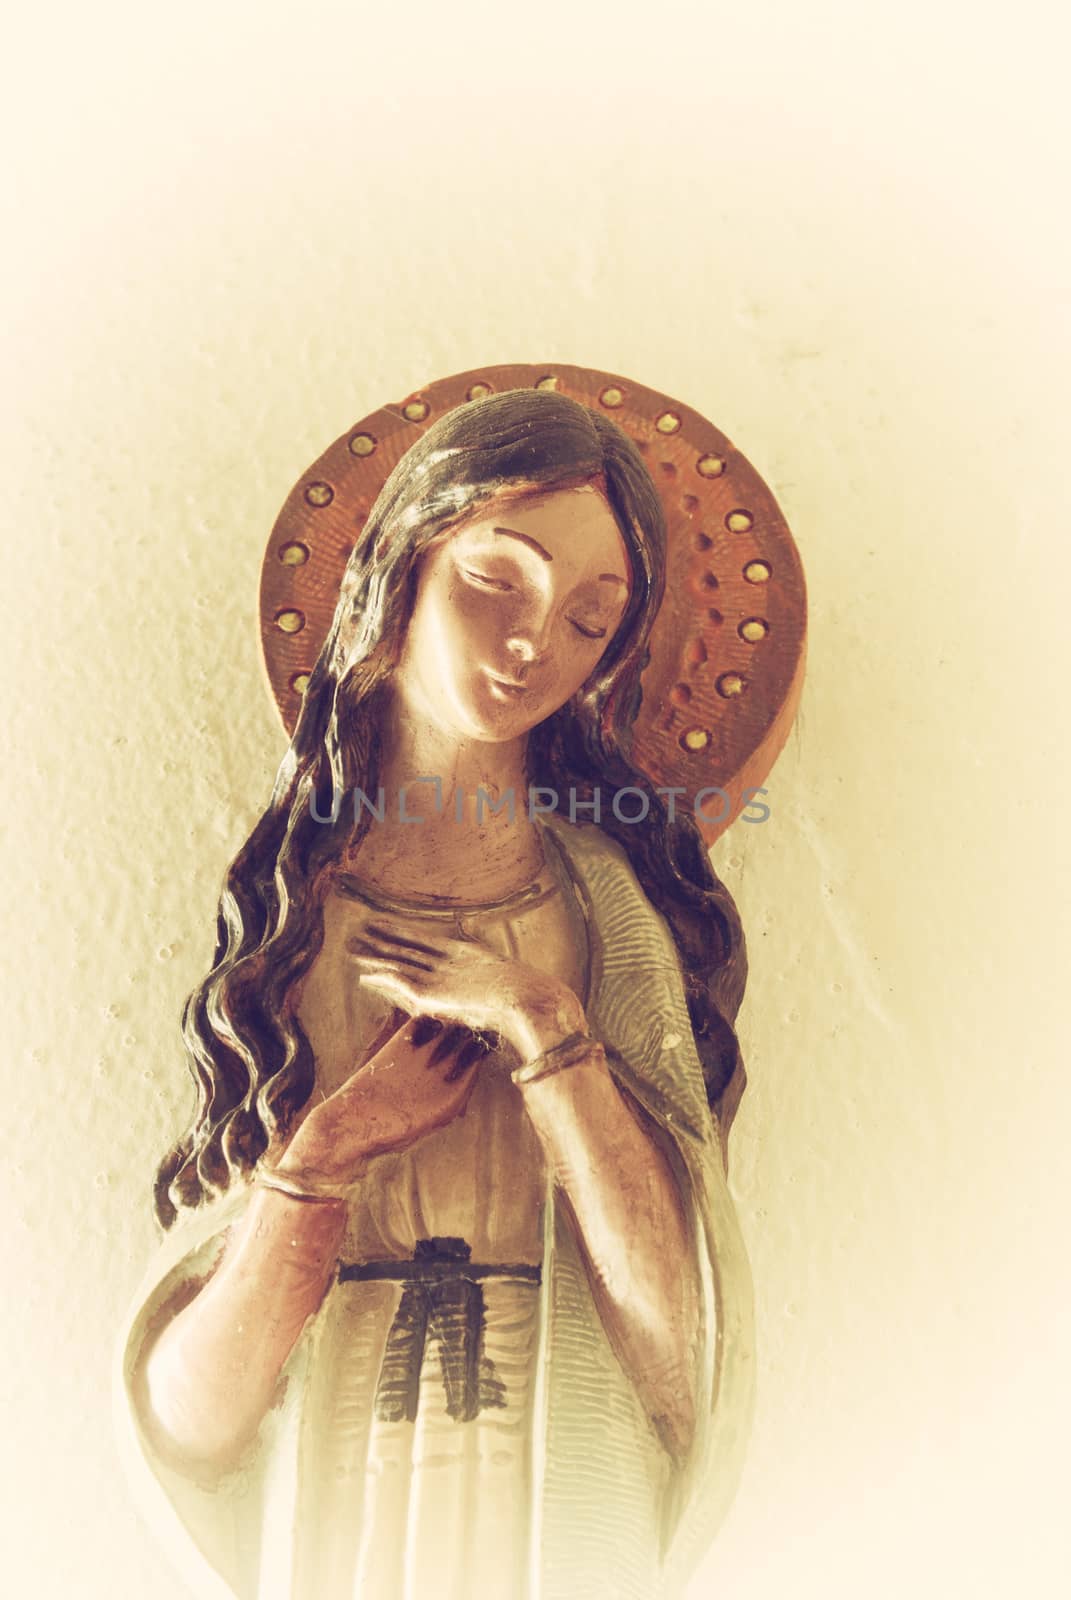 Photograph of Virgin Mary ceramic figure